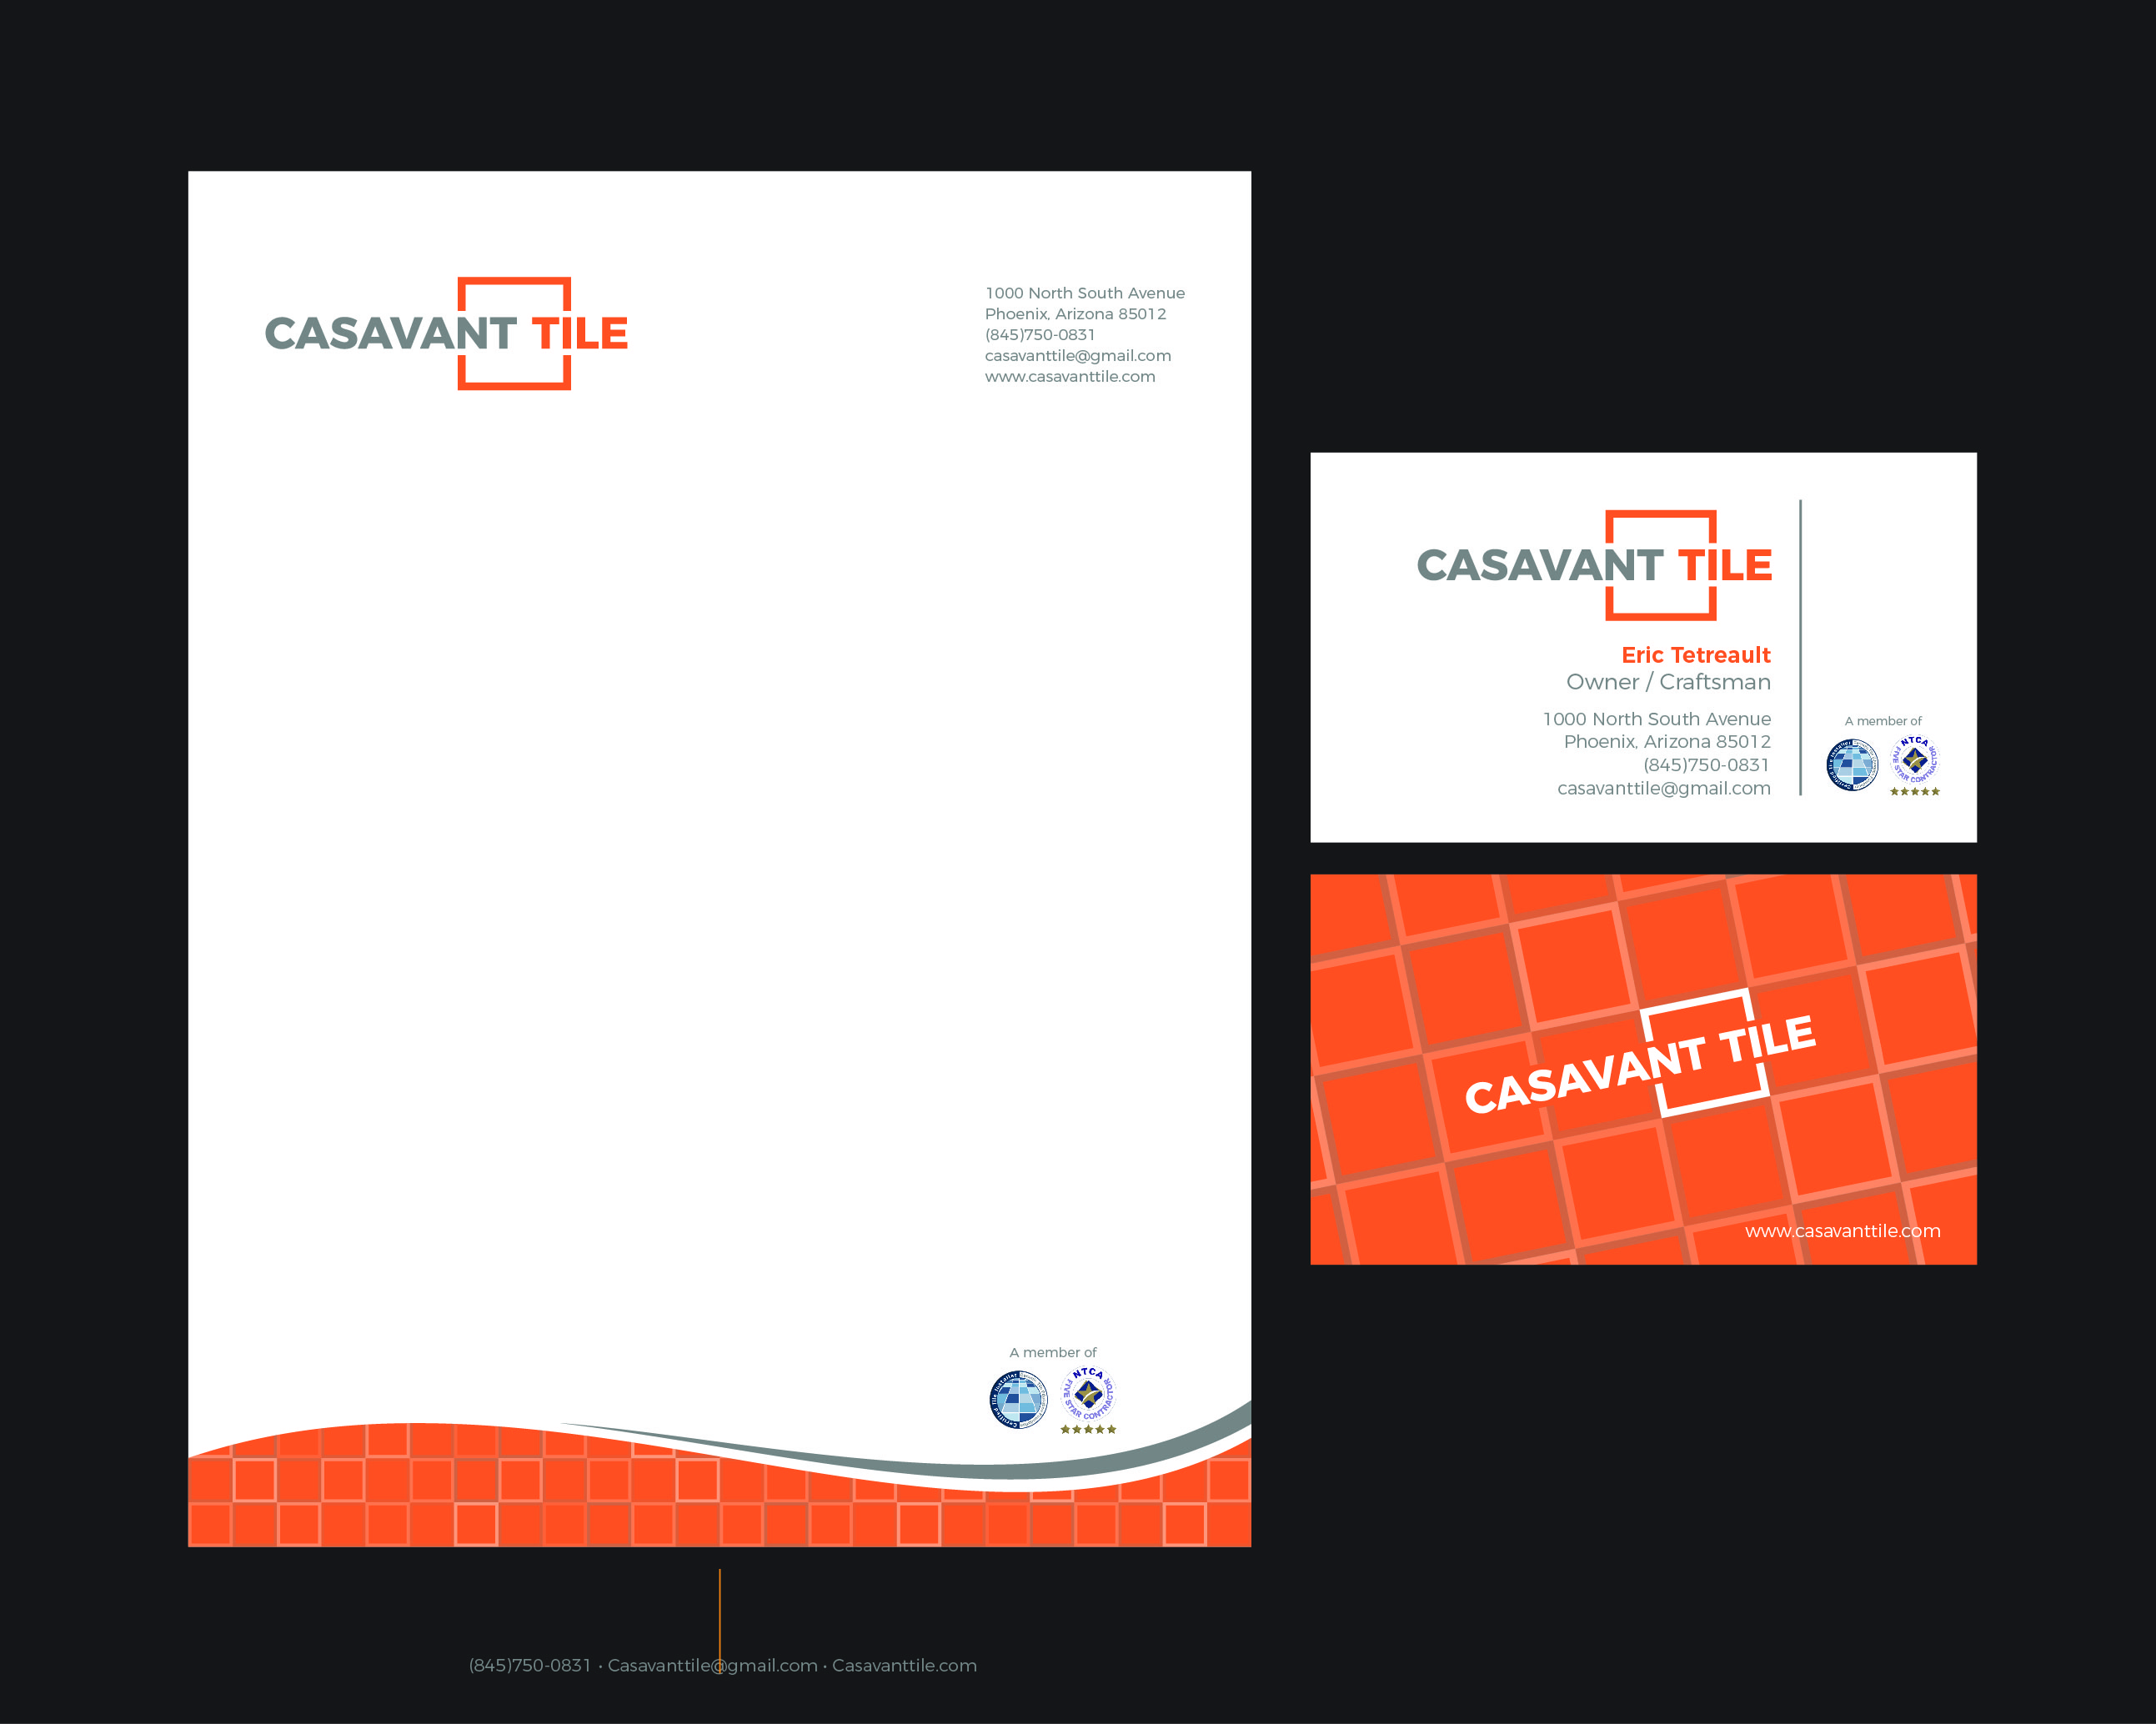 Business Card & Stationery Design entry 1776402 submitted by Efzone2005 to the Business Card & Stationery Design for Casavant Tile run by CasavantTile